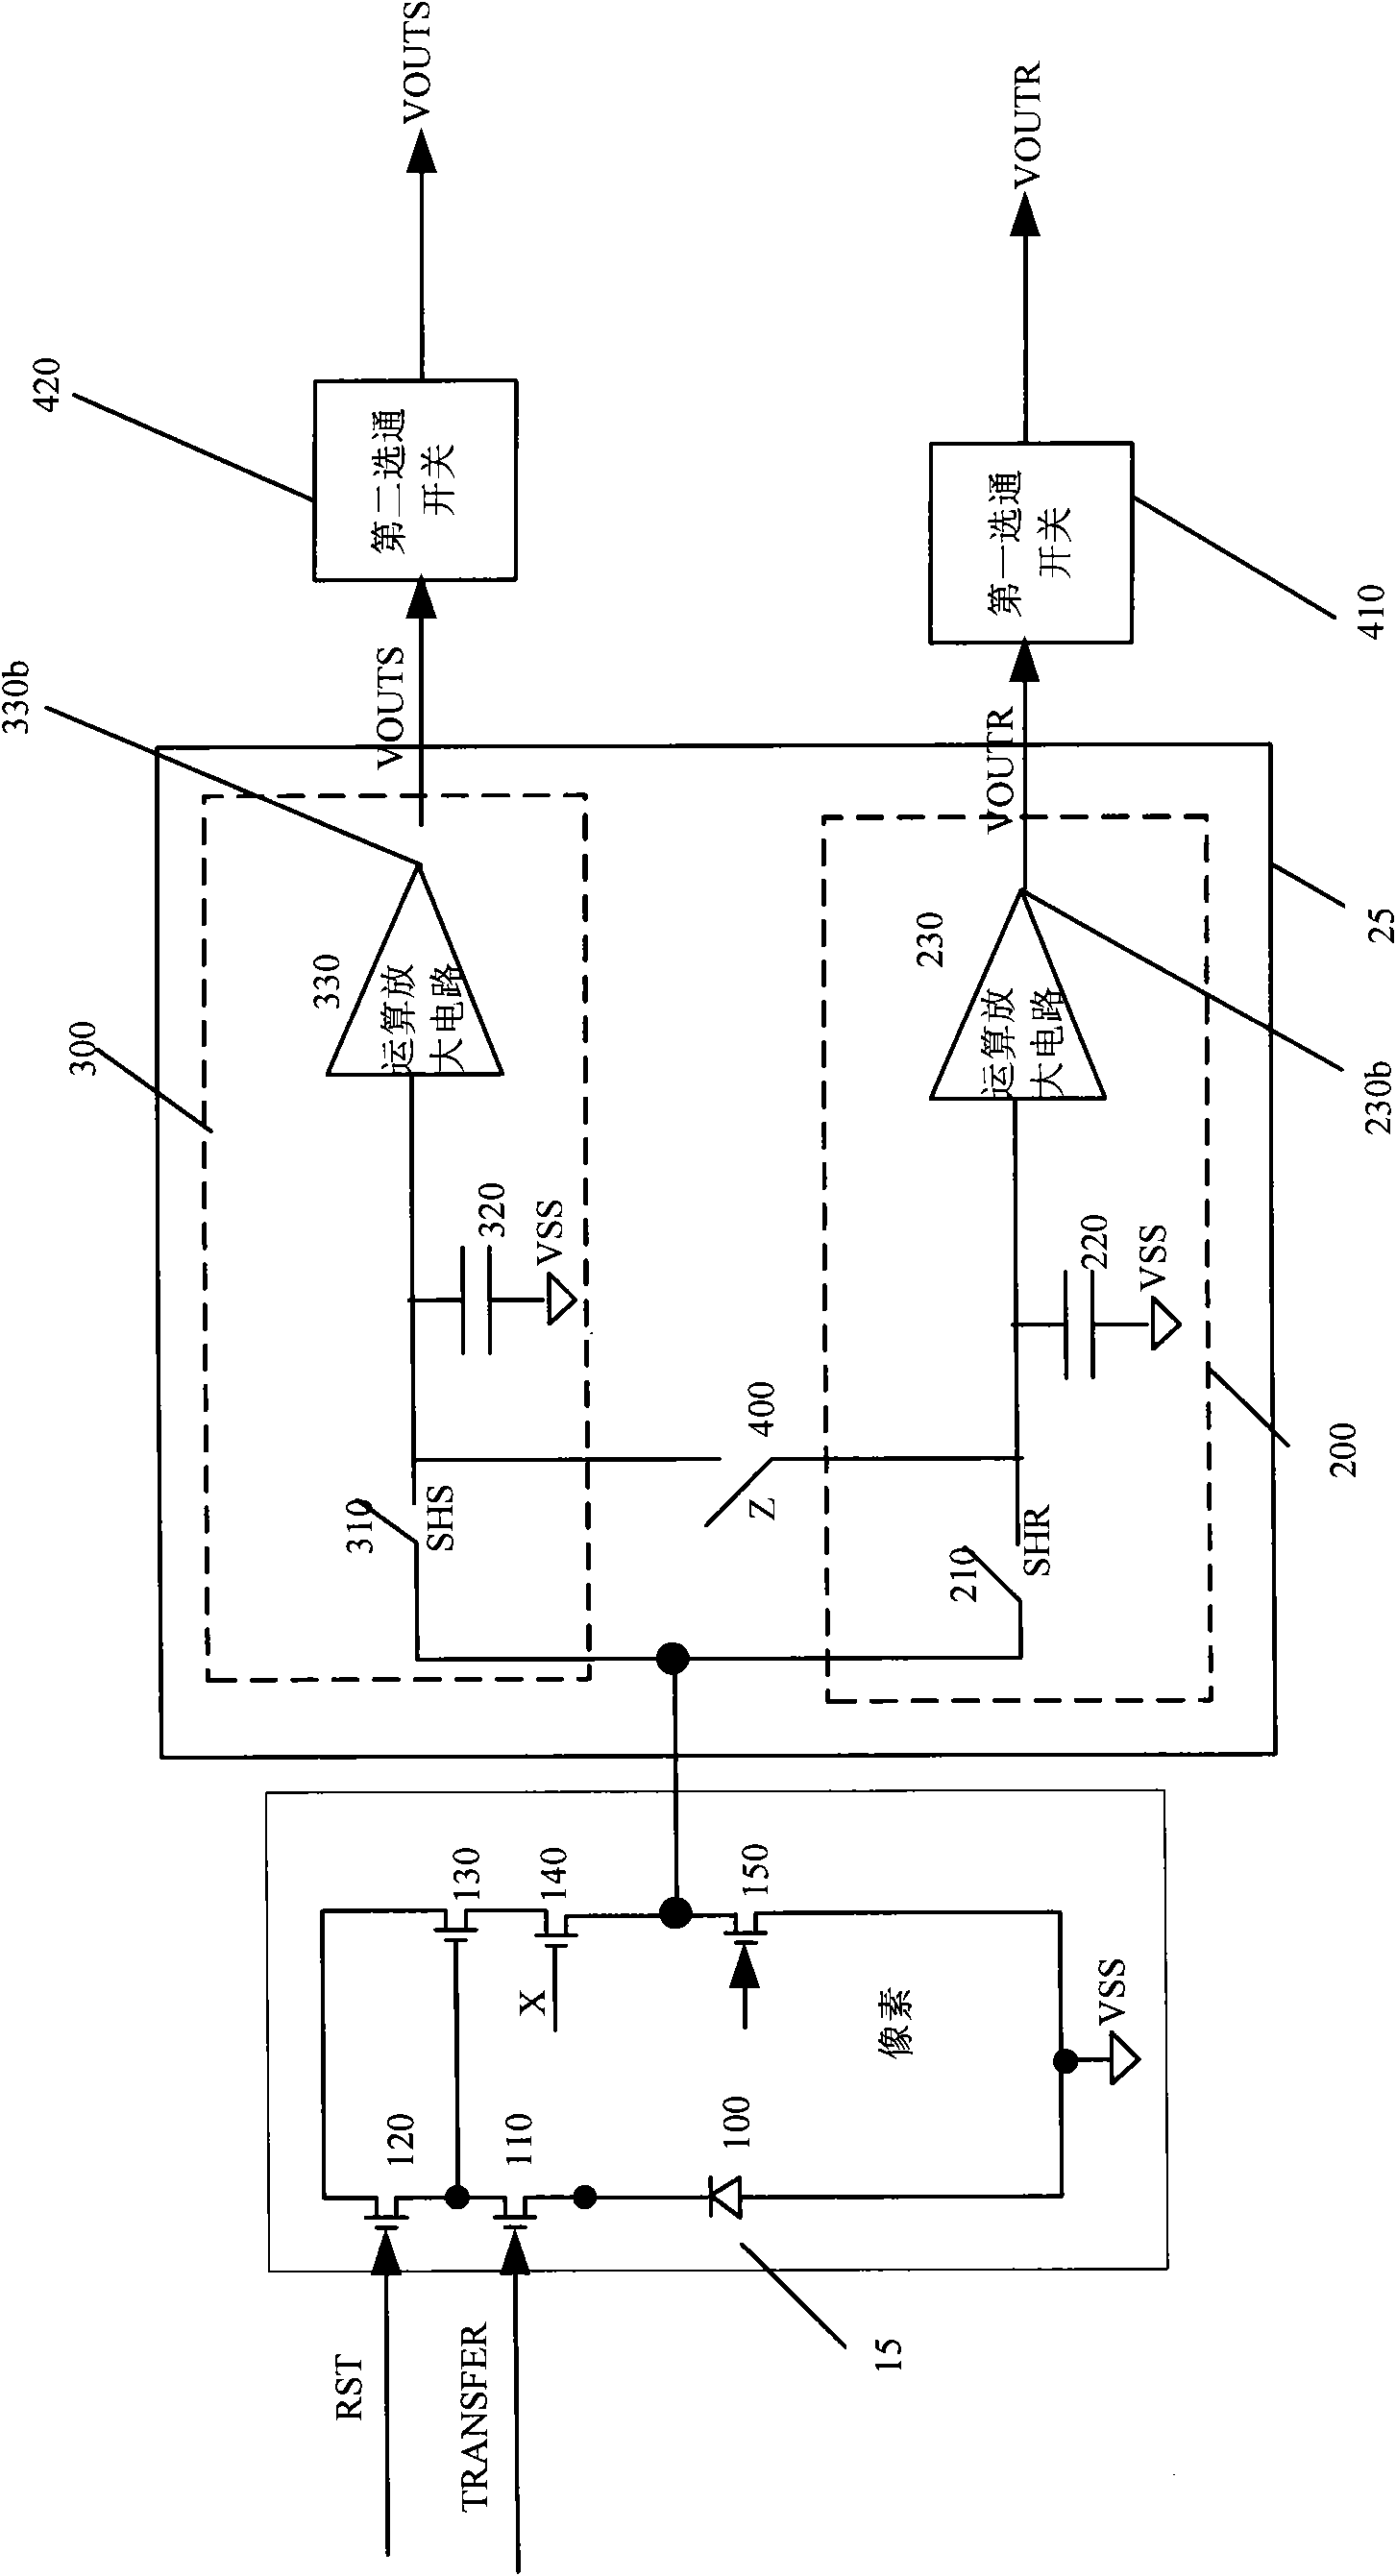 Image sensor and column processing circuit thereof